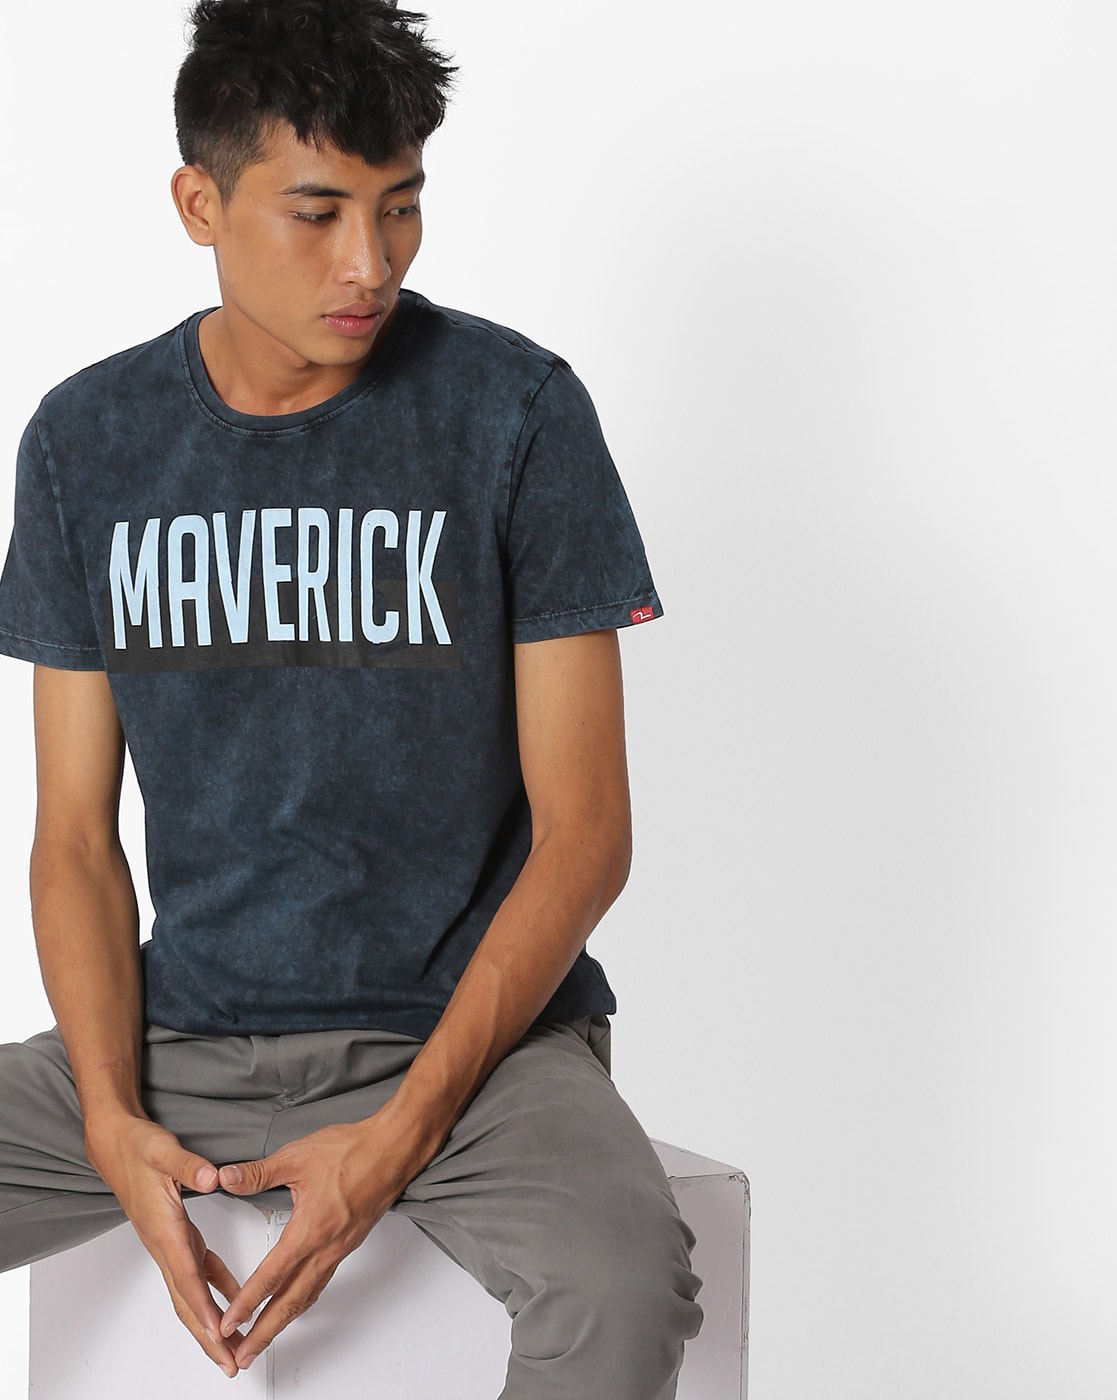 maverick t shirt india